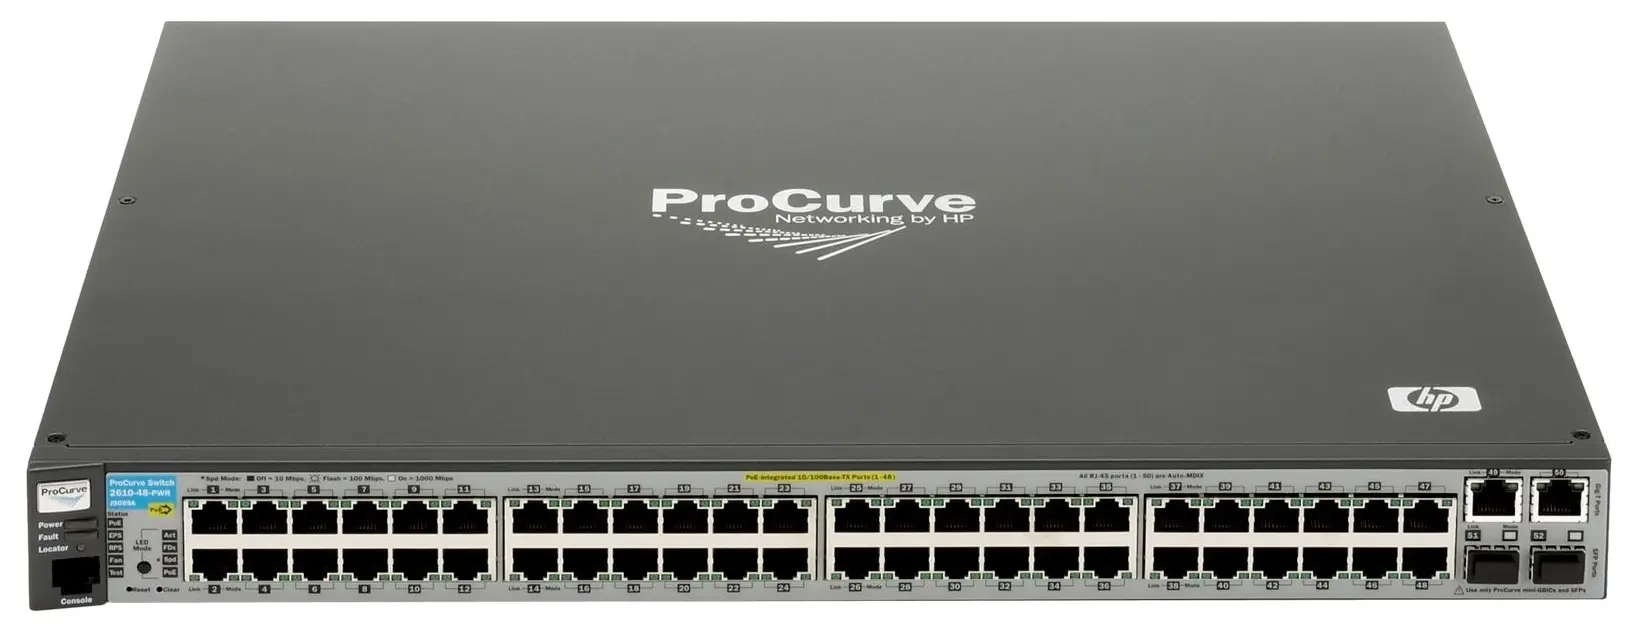 J9088-60101 HP ProCurve E2610-48 48-Ports Fast Ethernet...